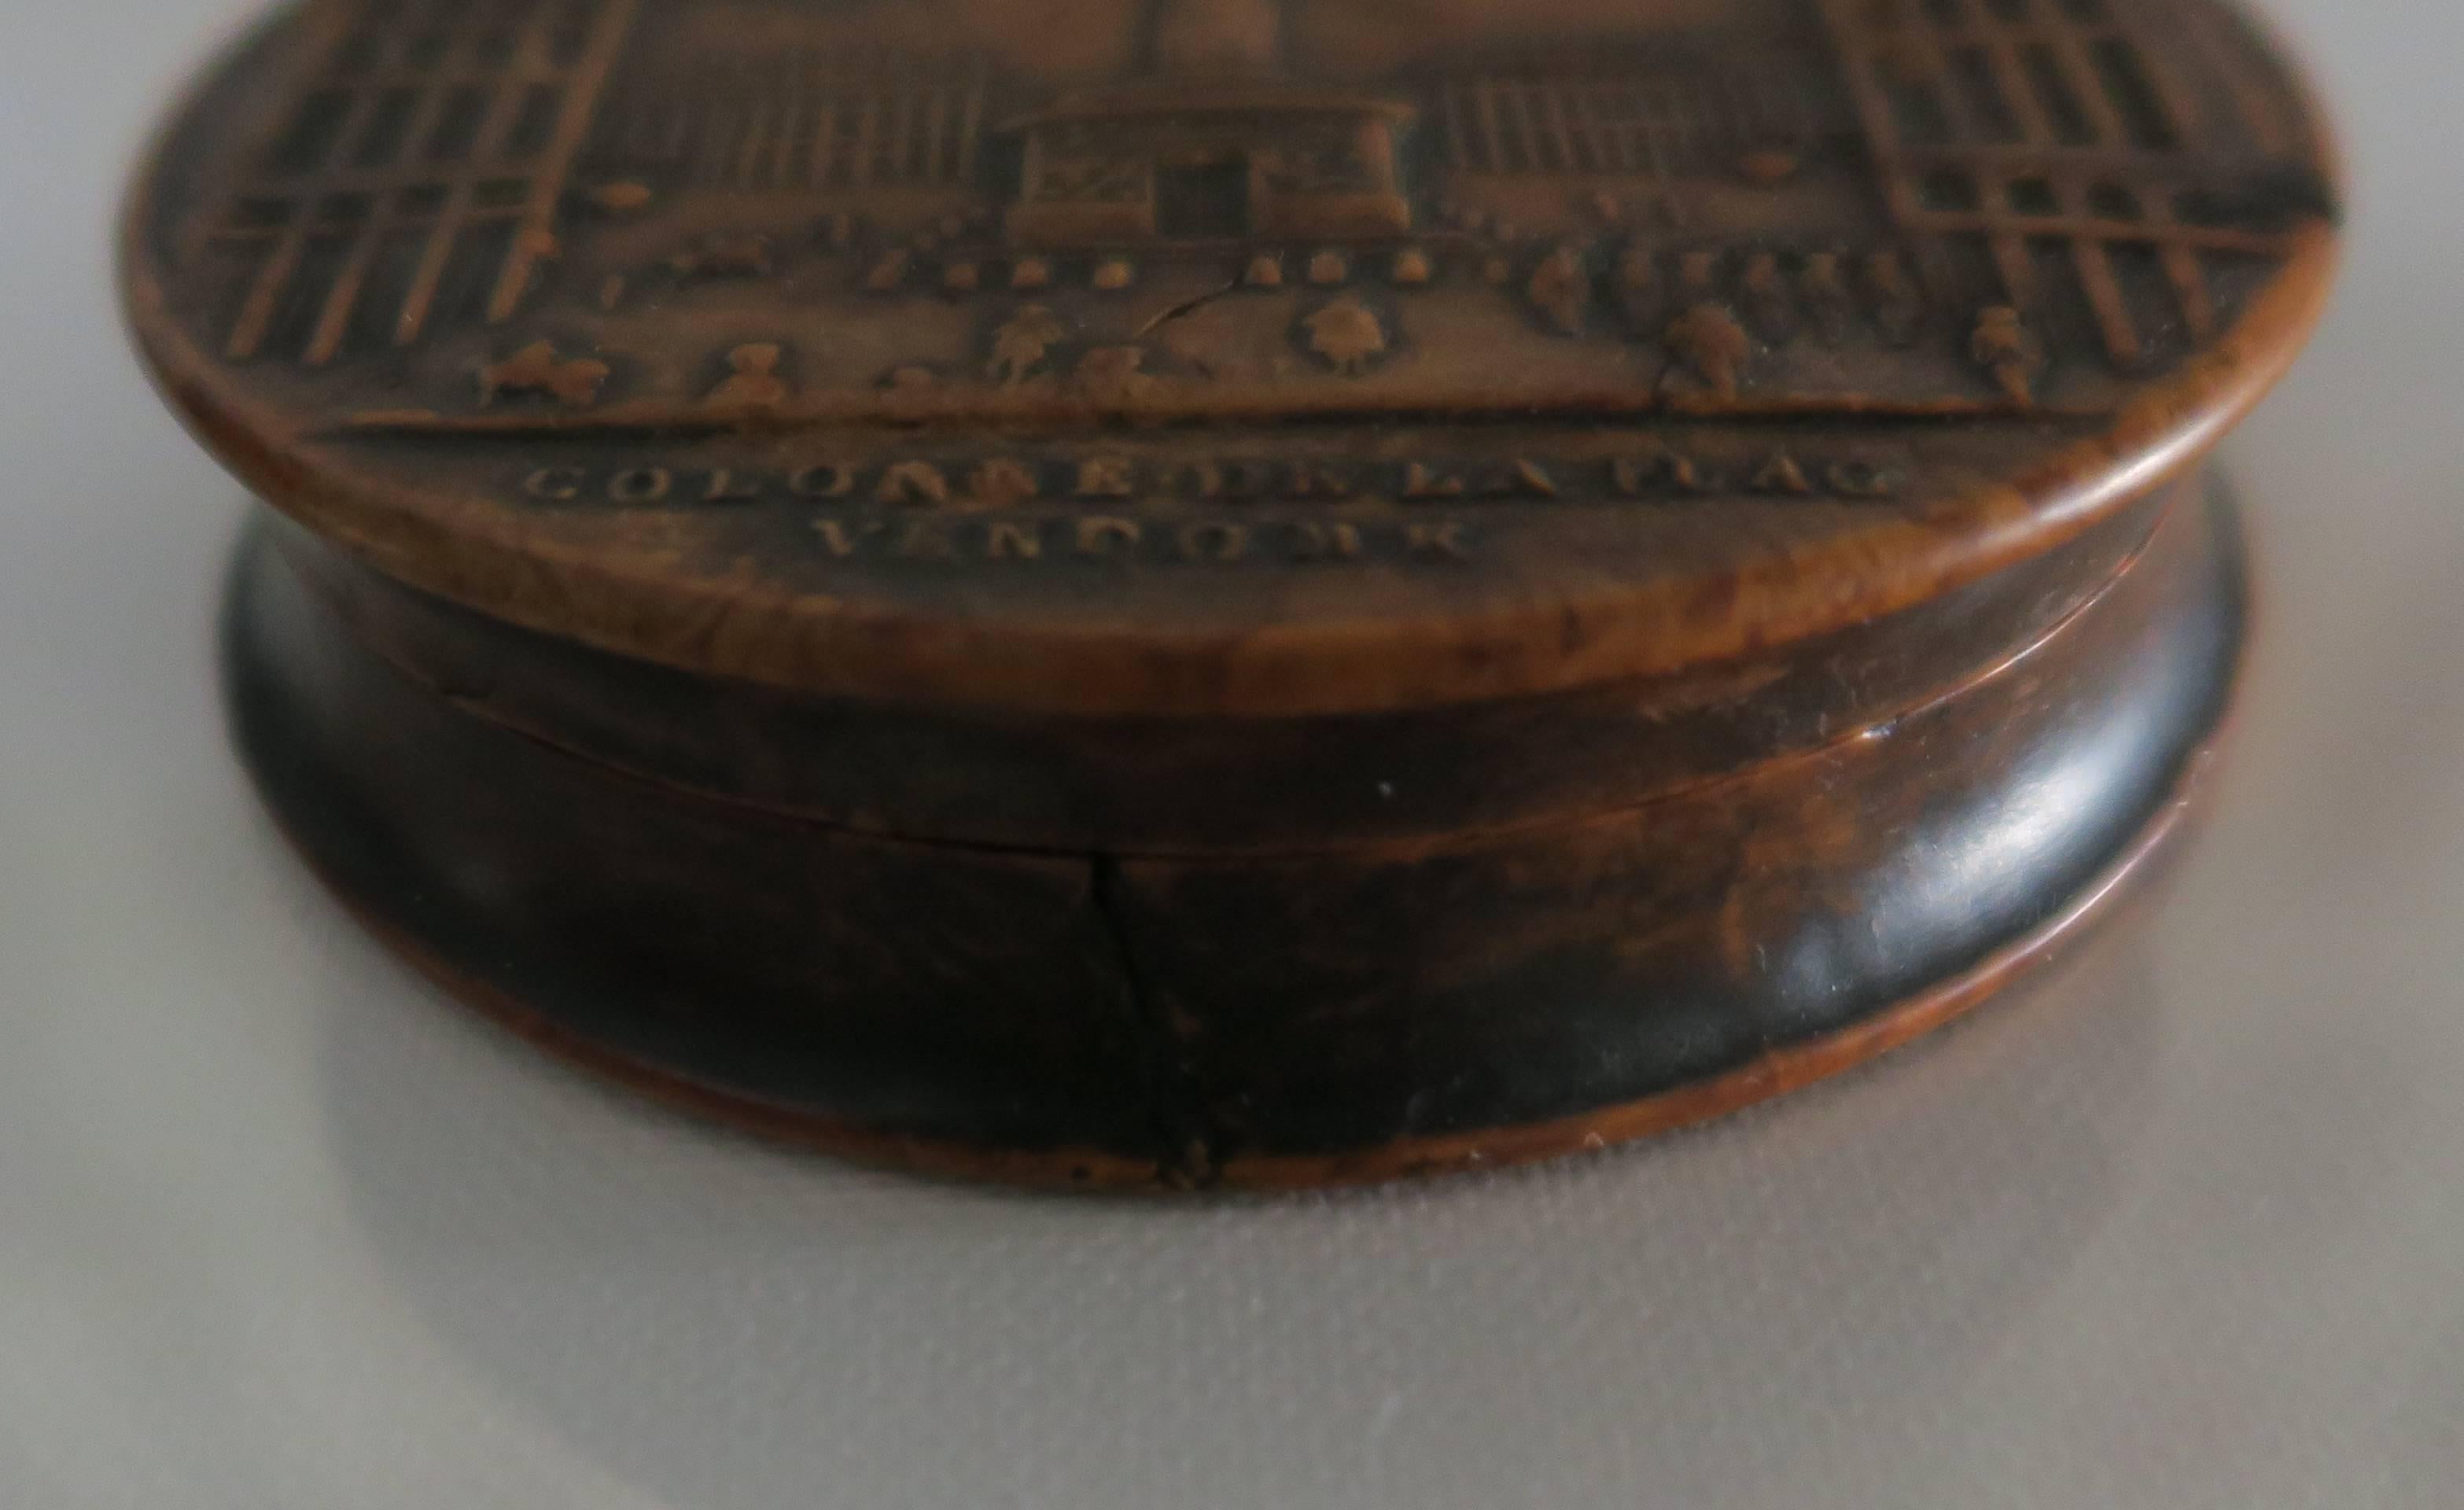 The circular box depicting Place Vendome with quote on bottom 'COLON DE LA PLACE VENDOME.' The interior with collectors label 'EVAN THOMAS COLLECTION 408.’